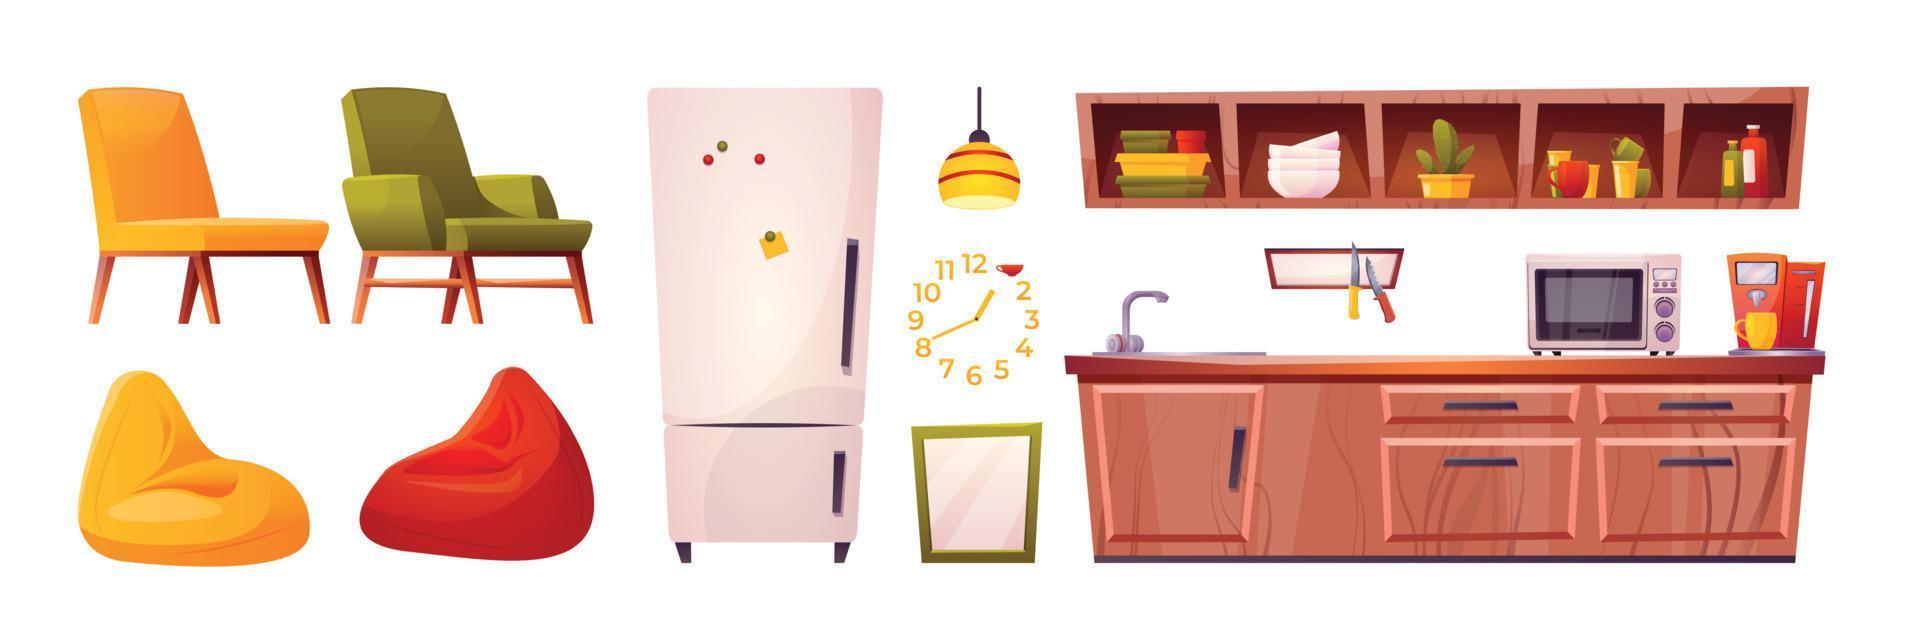 tekenfilm reeks van herberg keuken meubilair Aan wit vector